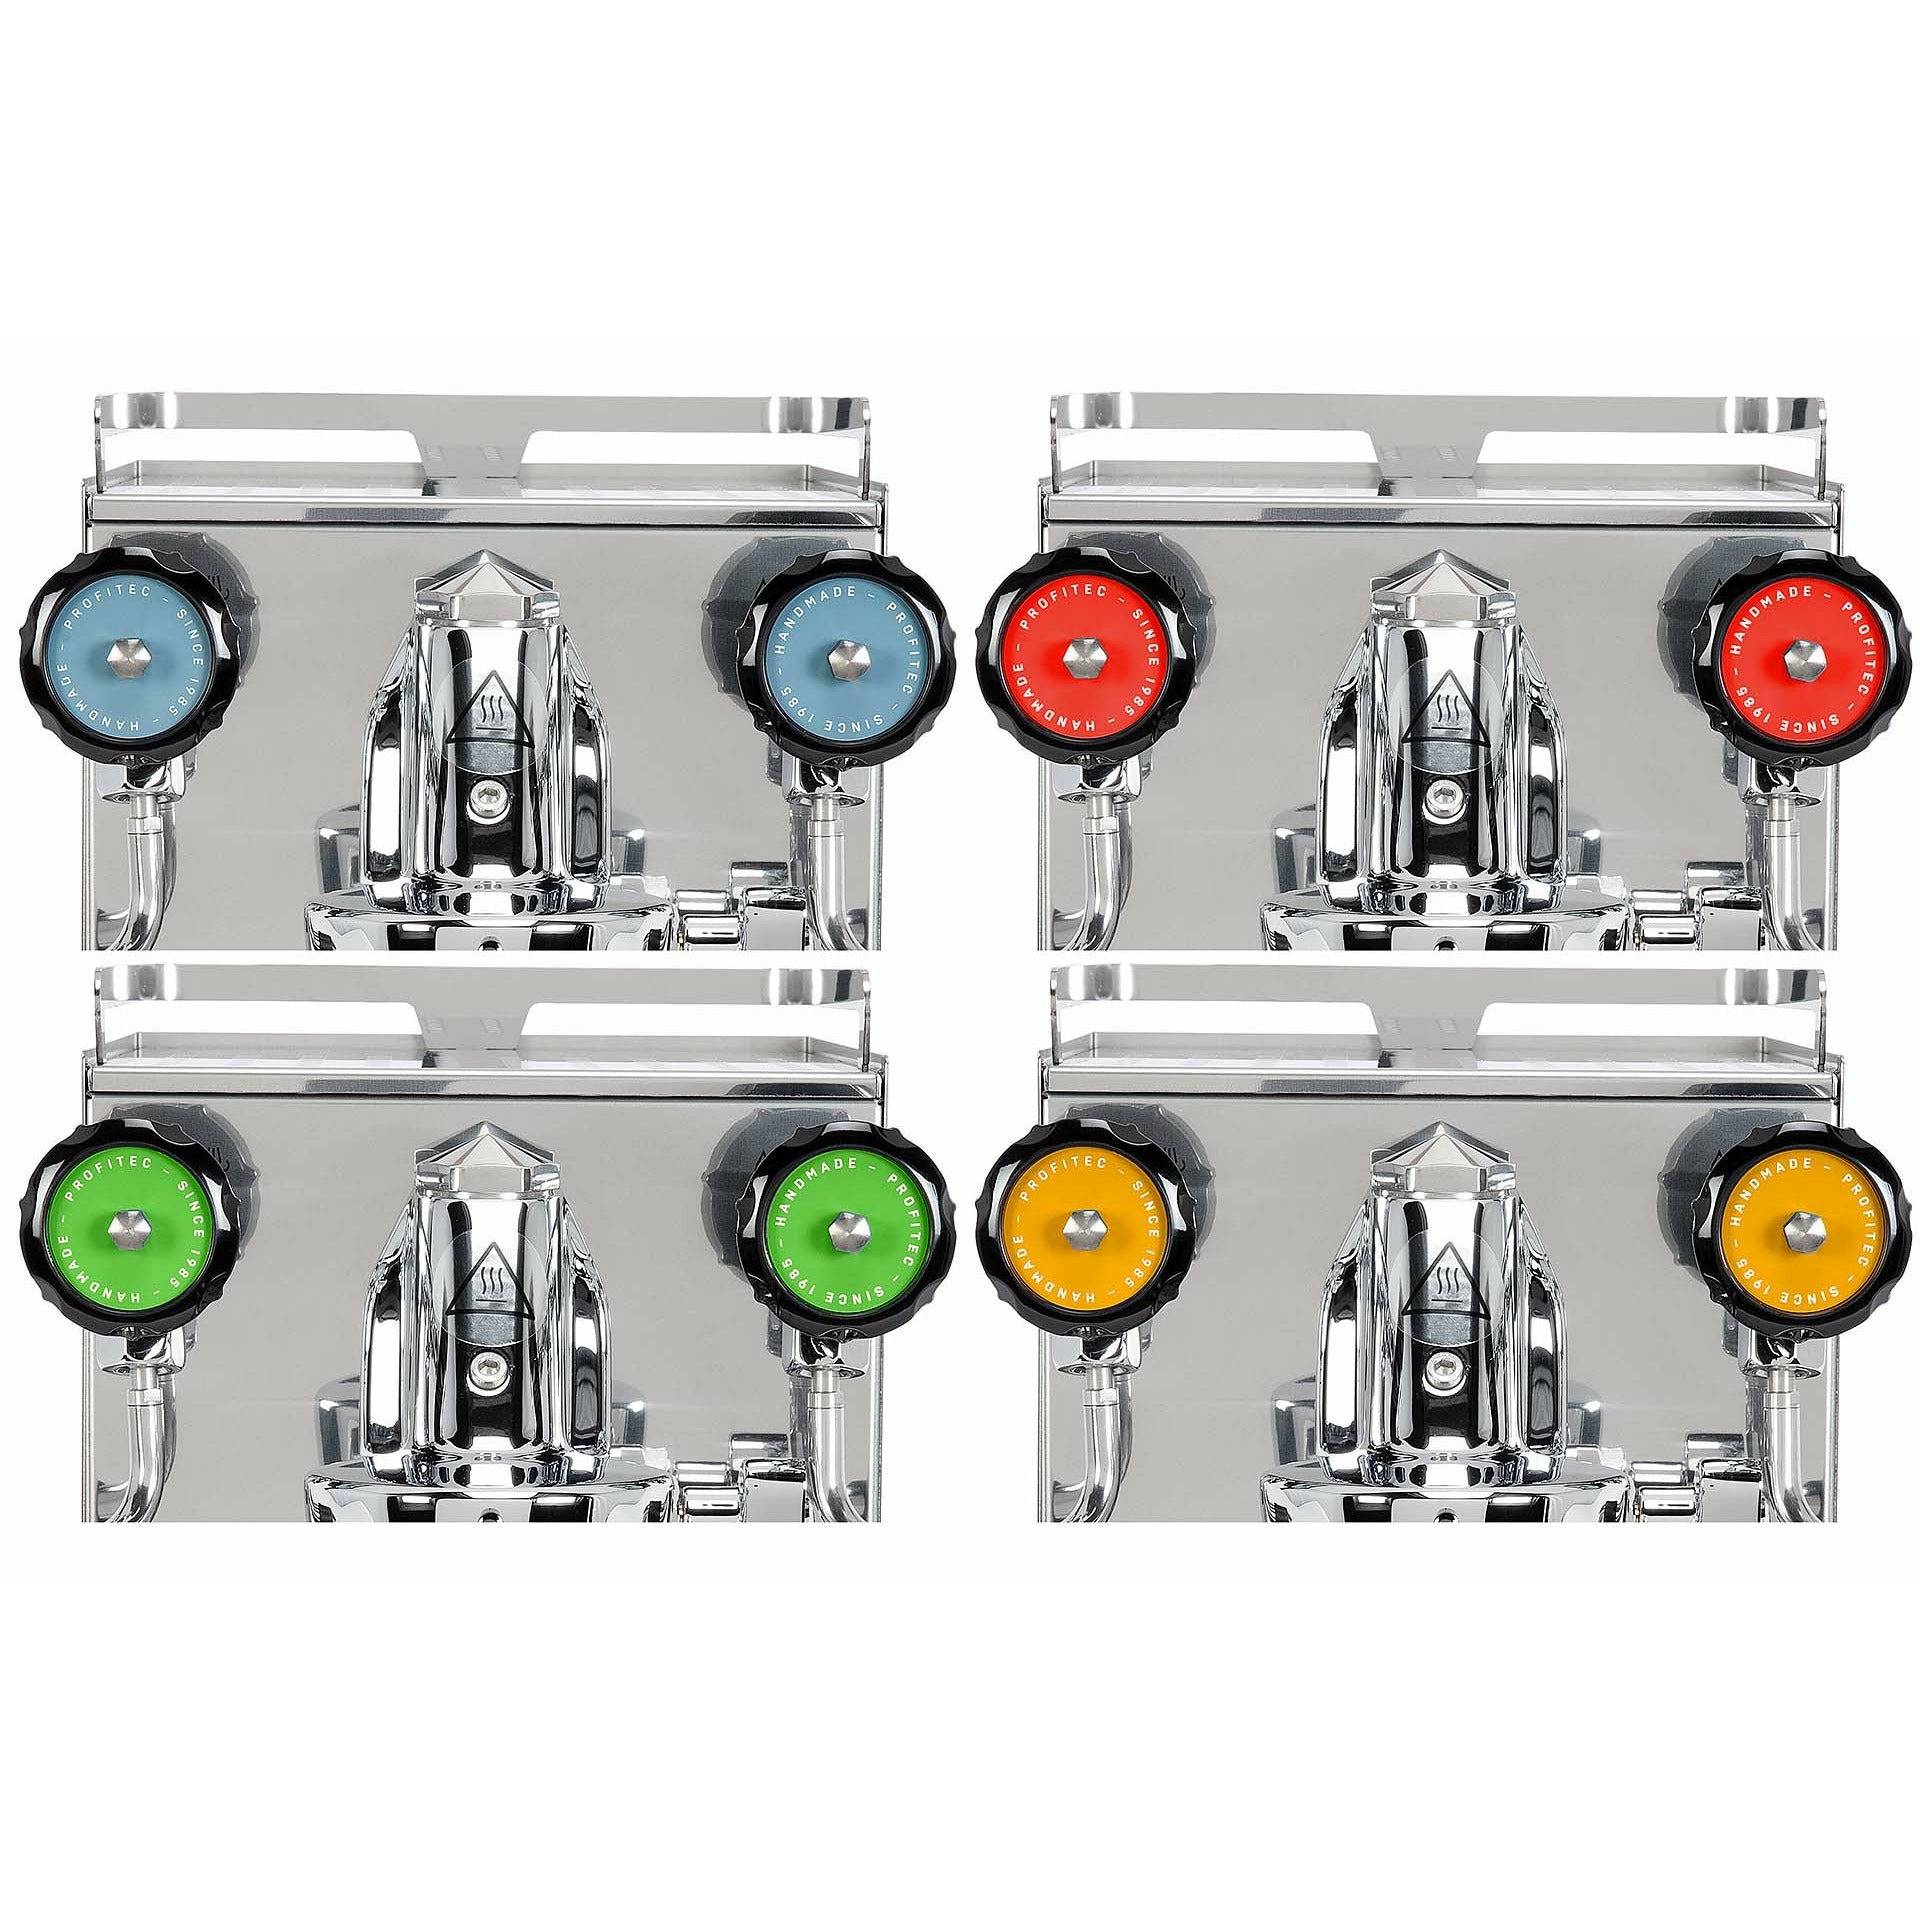 Profitec Pro 400 - Espressomaschine E61-Brühgruppe, Farbdisclets, Zweikreiser, PID Espressomaschinen Profitec    - Rheinland.Coffee